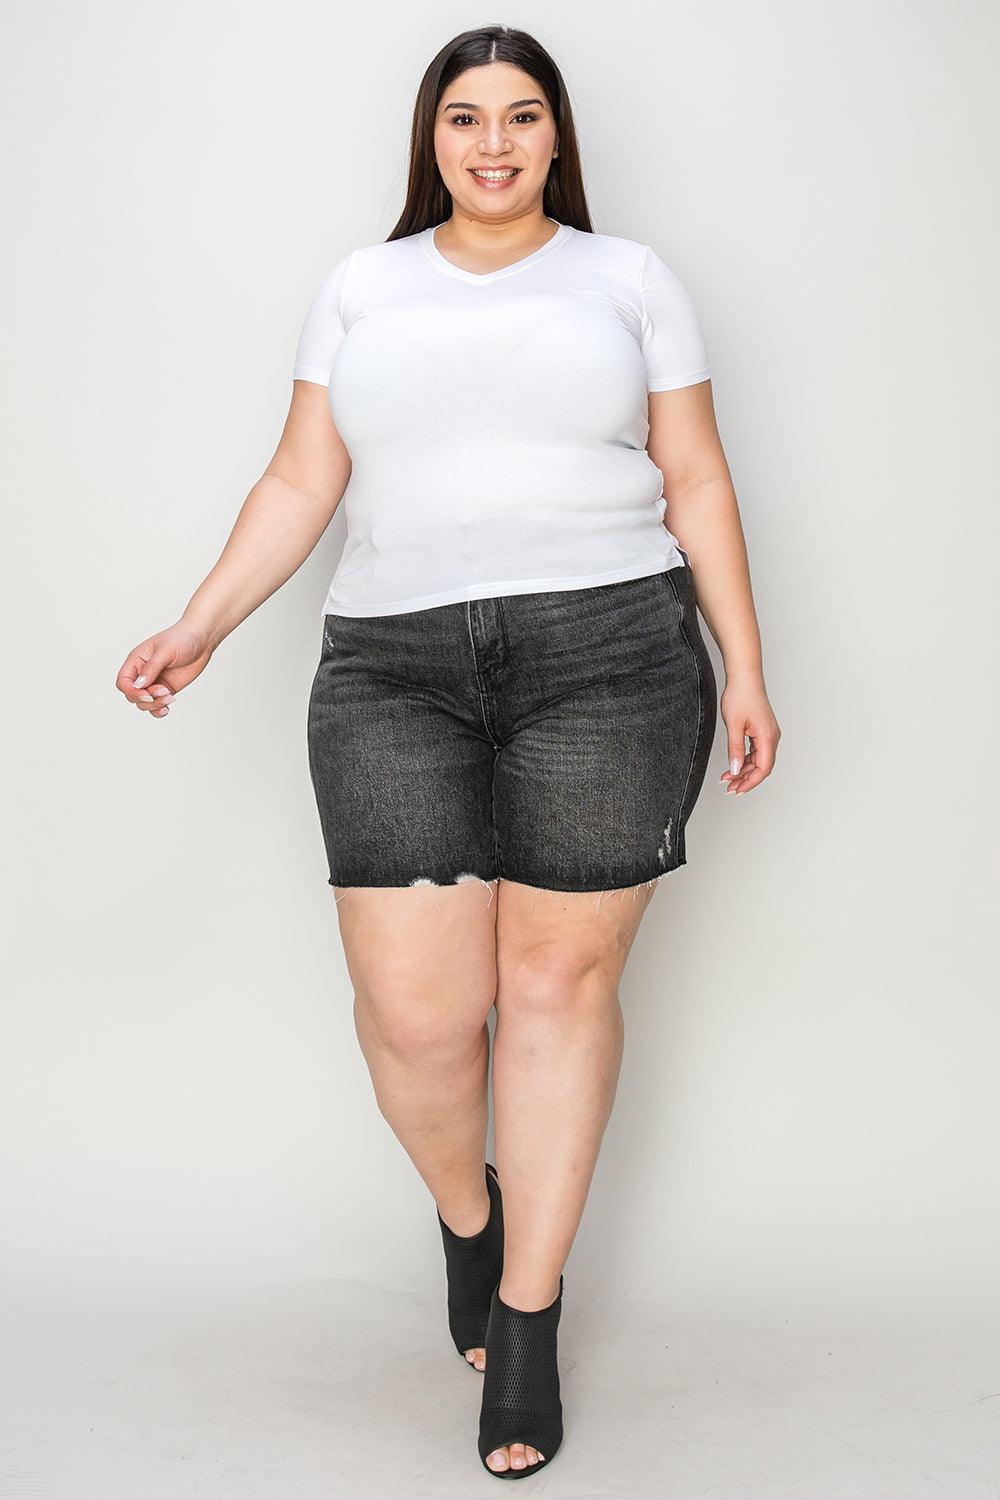 Bona Fide Fashion - Full Size High Waist Tummy Control Denim Shorts - Women Fashion - Bona Fide Fashion